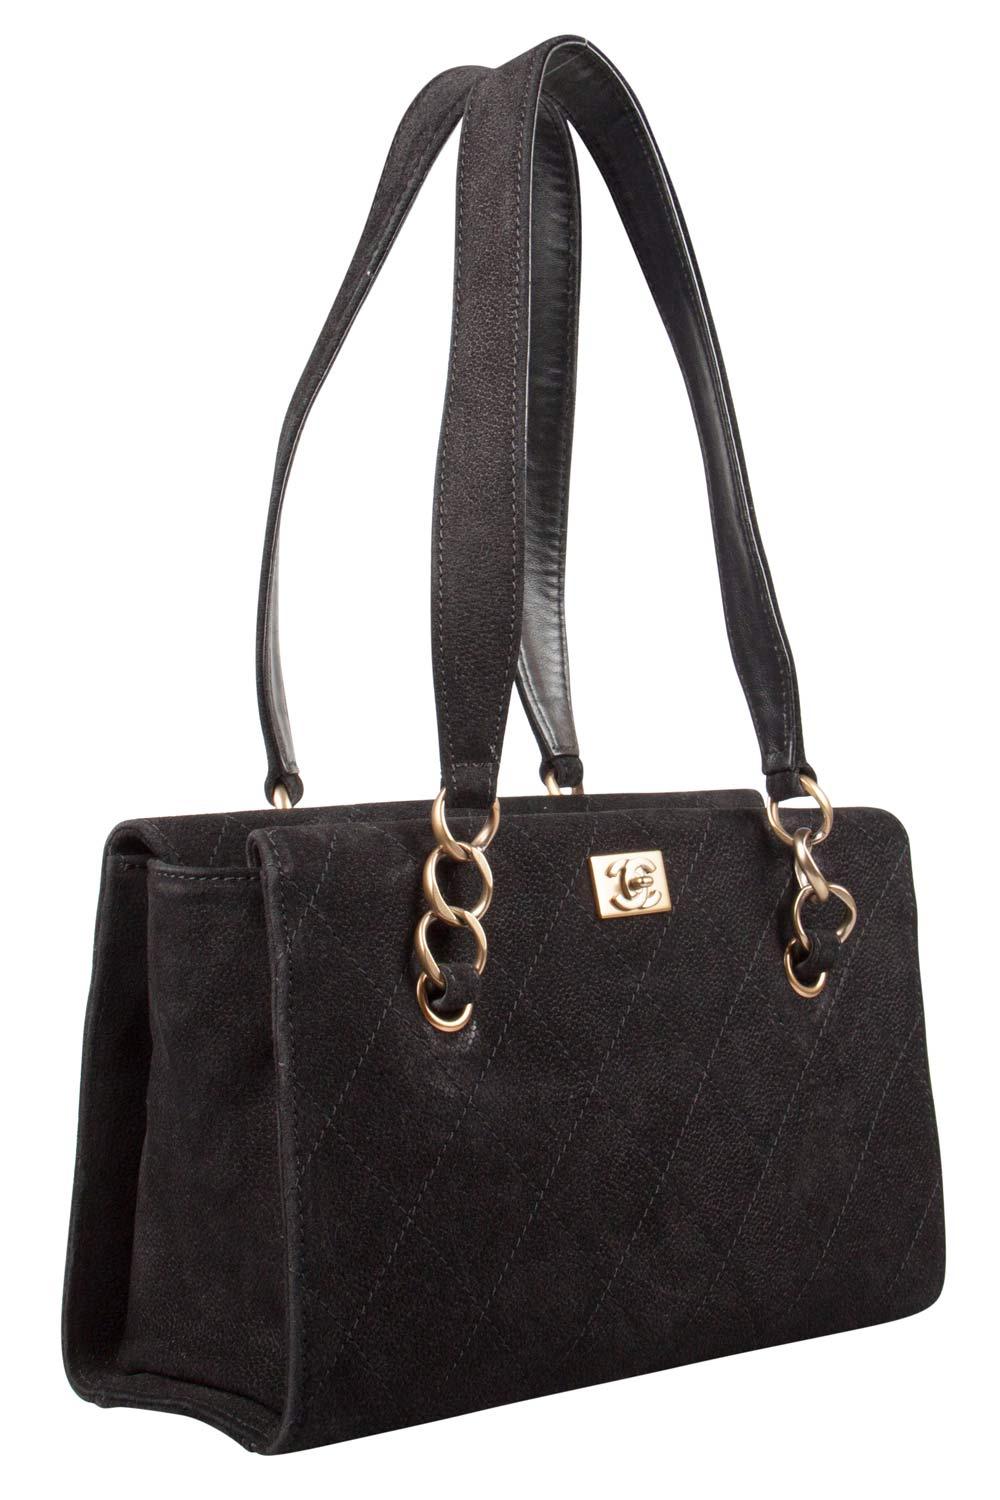 Chanel Black Nubuck Leather Chain Shoulder Bag In Good Condition In Dubai, Al Qouz 2